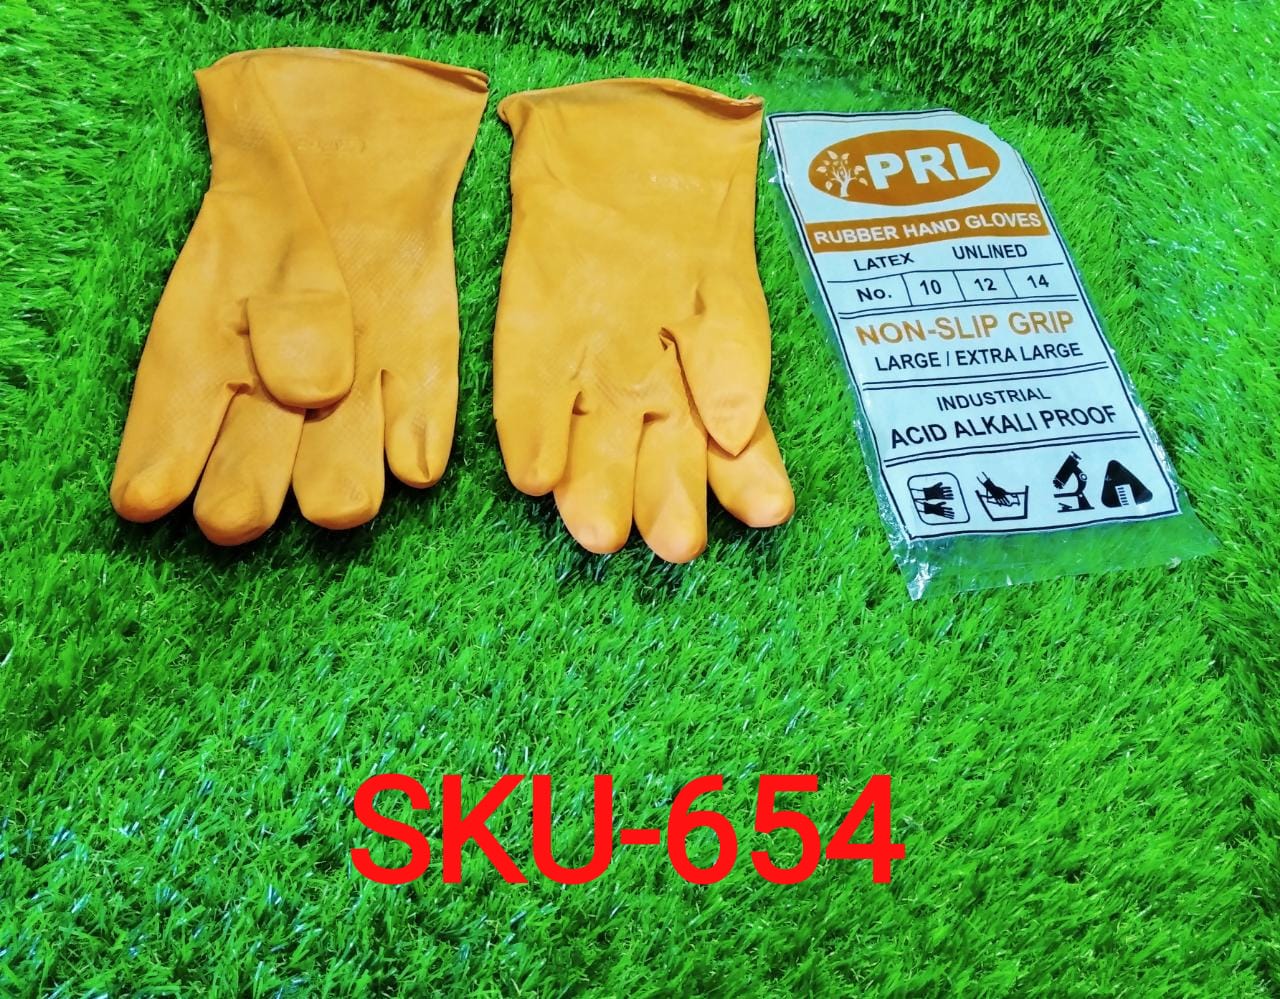 654 - Cut Glove Reusable Rubber Hand Gloves (Orange) - 1 pc 